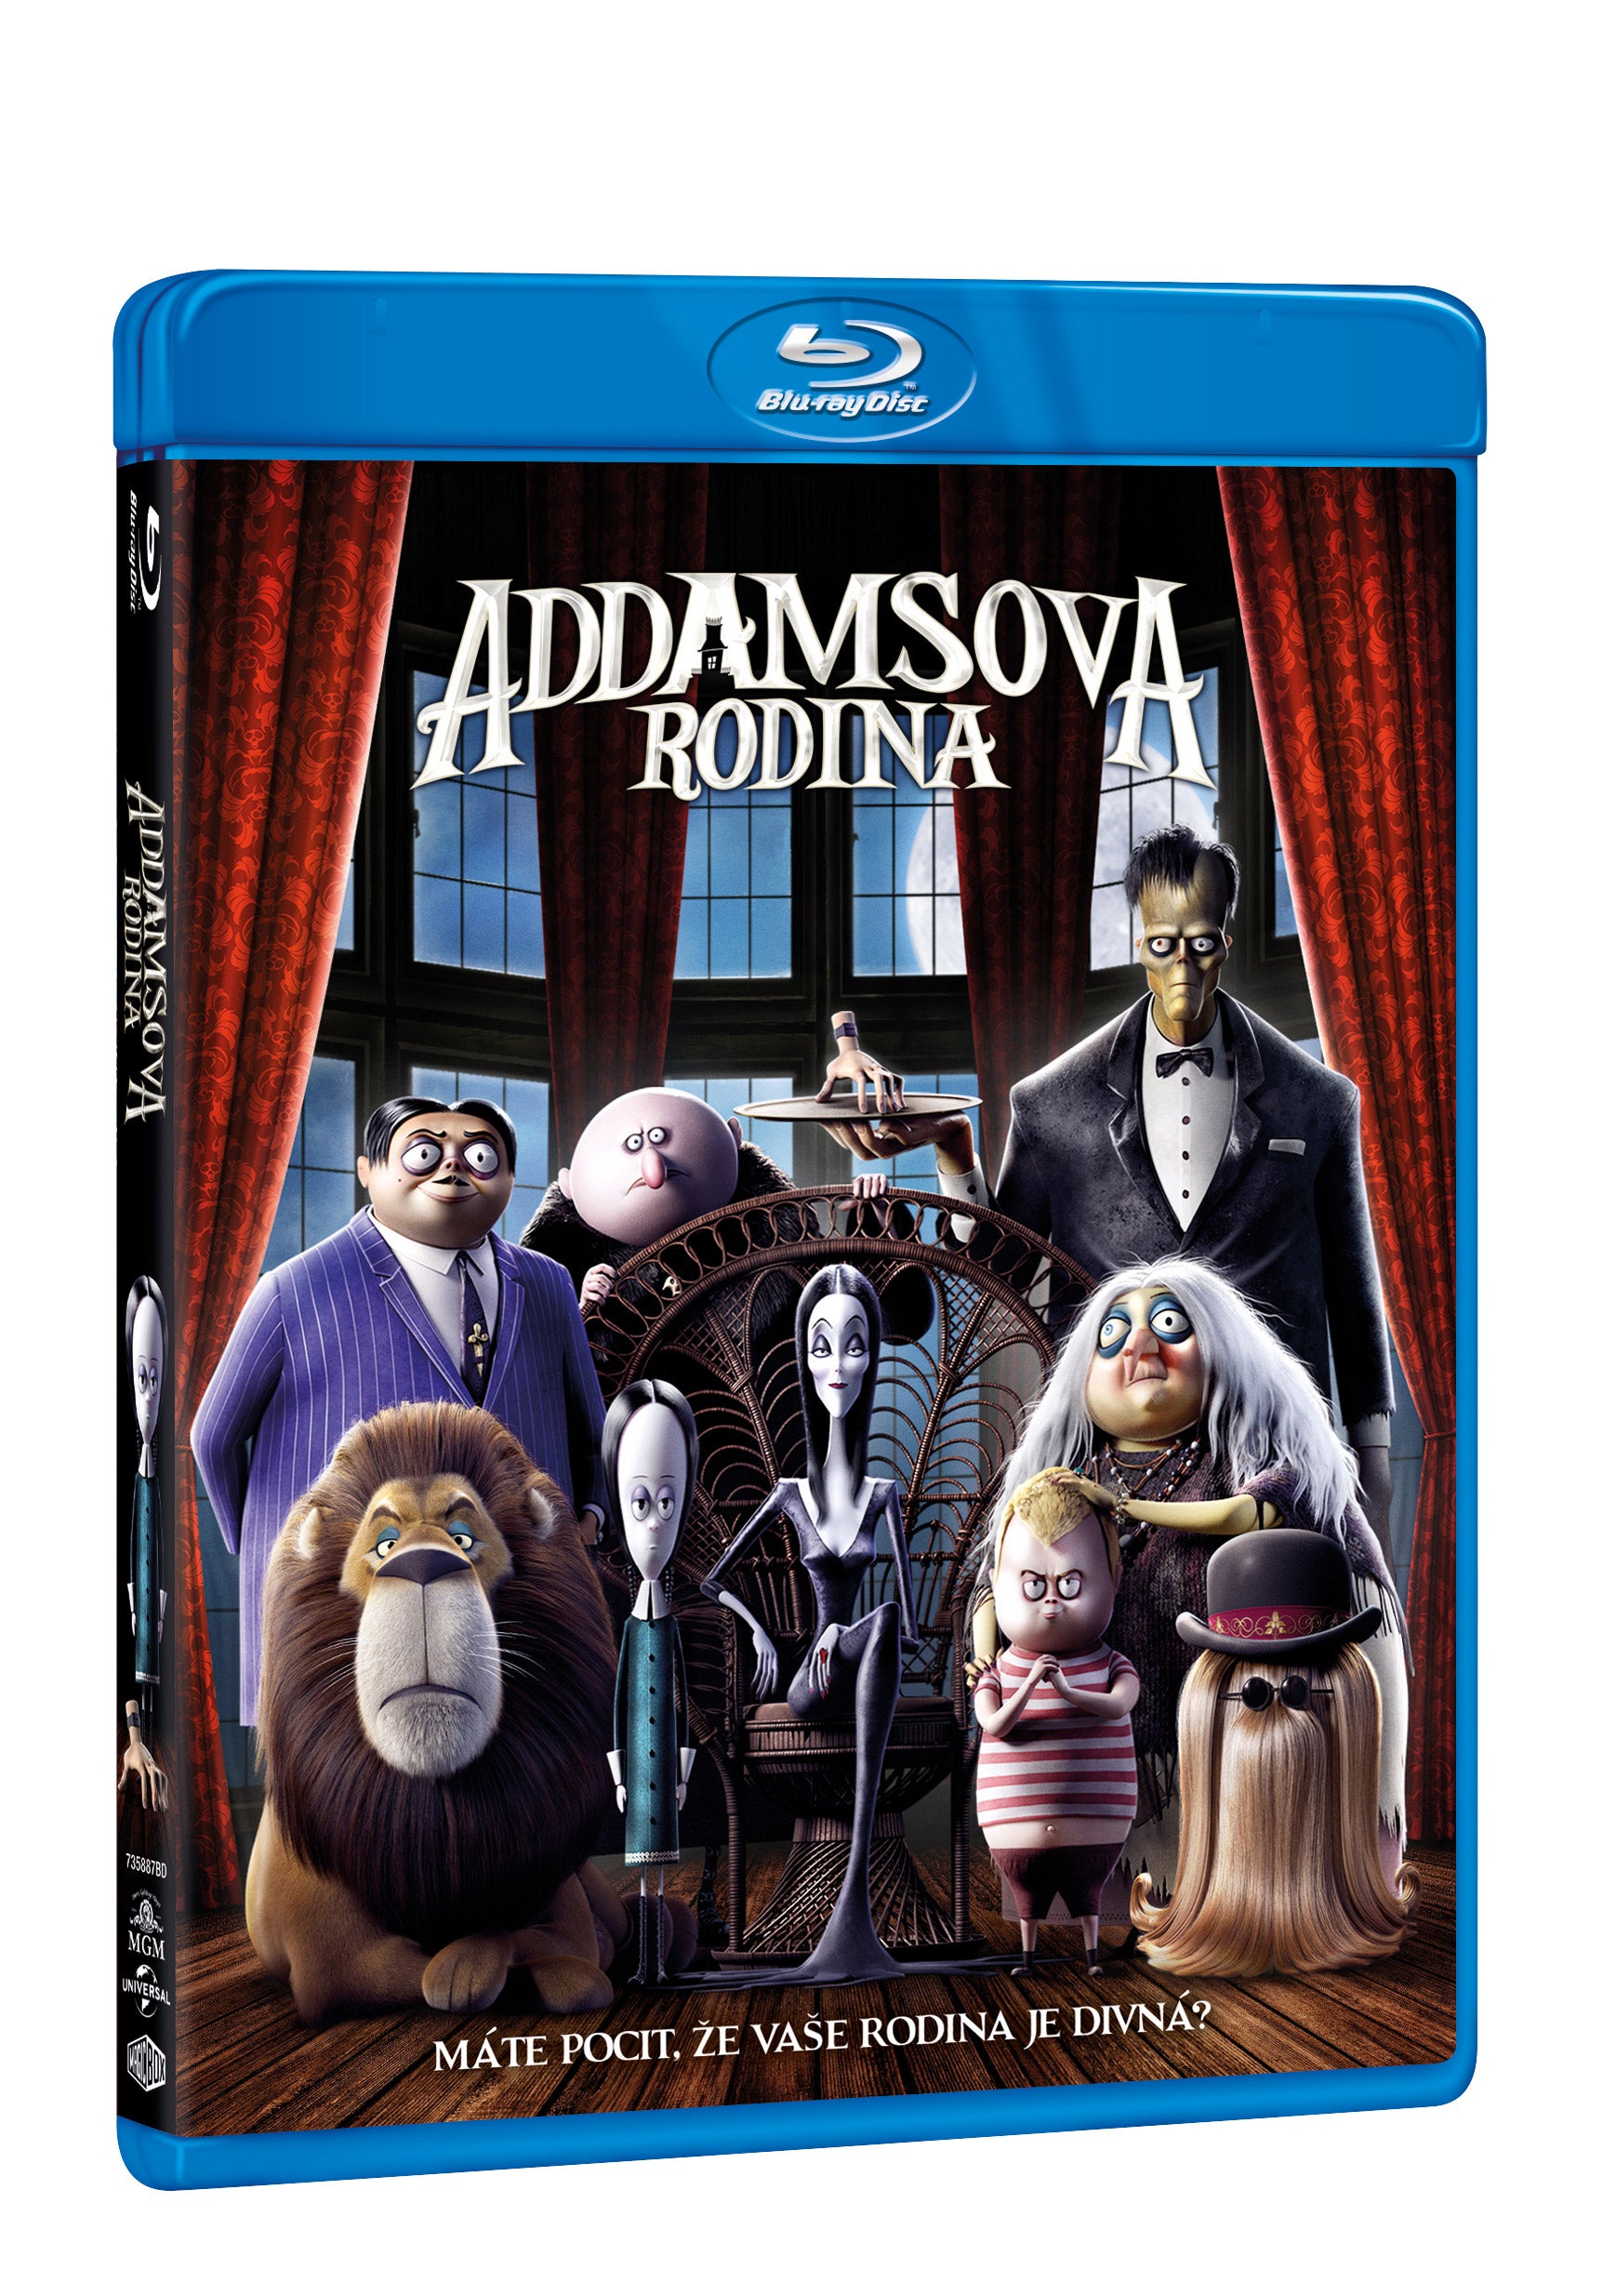 Addamsova rodina BD / The Addams Family - Czech version